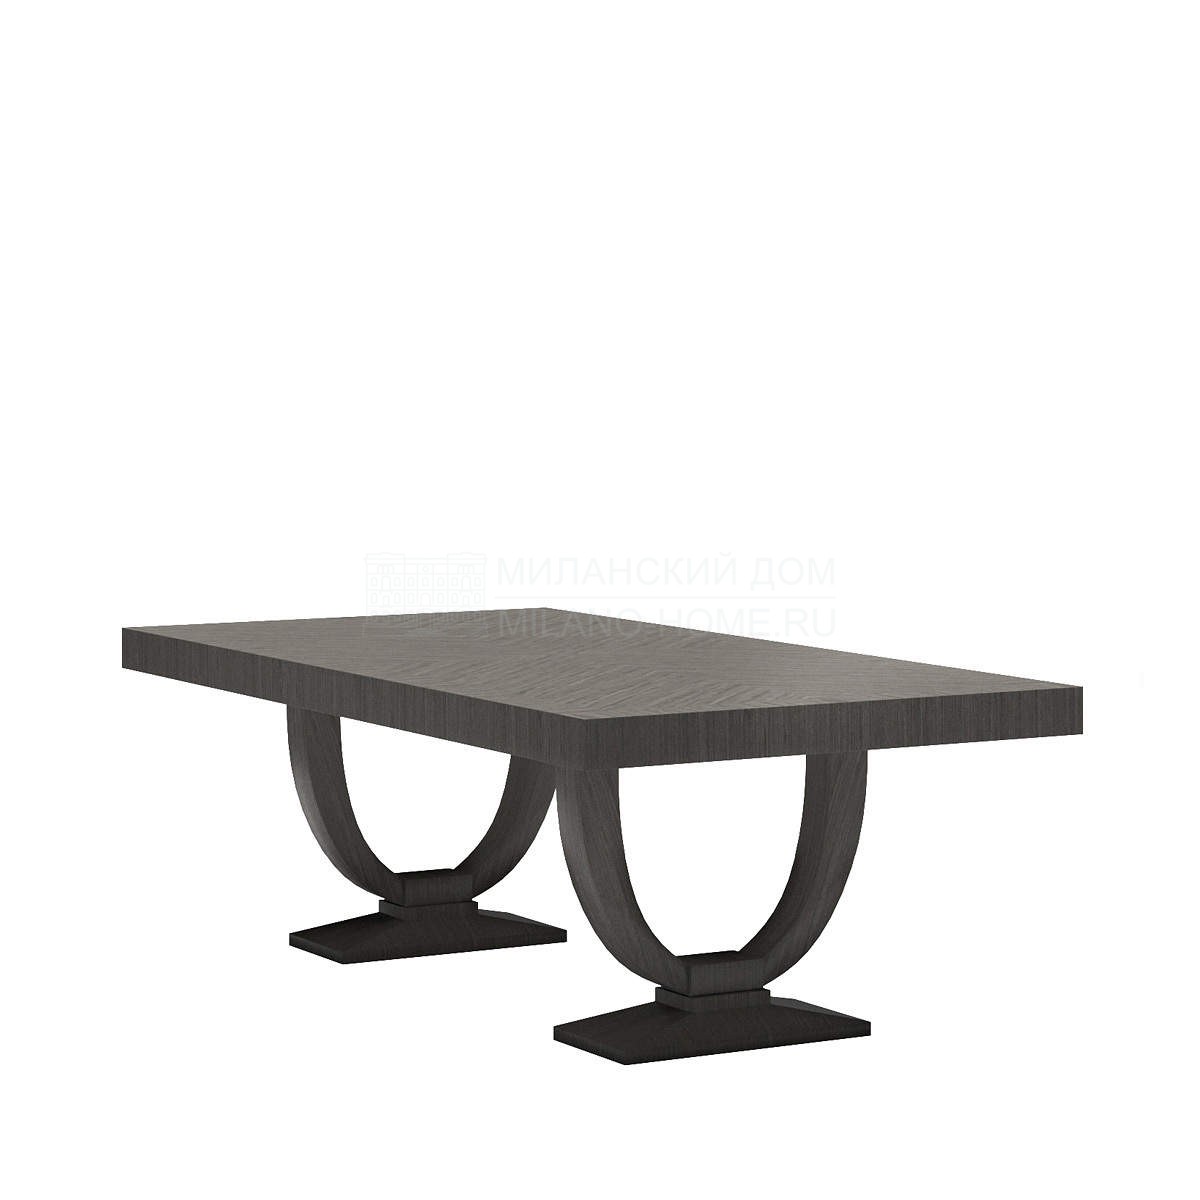 Обеденный стол Chelsea table из Испании фабрики COLECCION ALEXANDRA